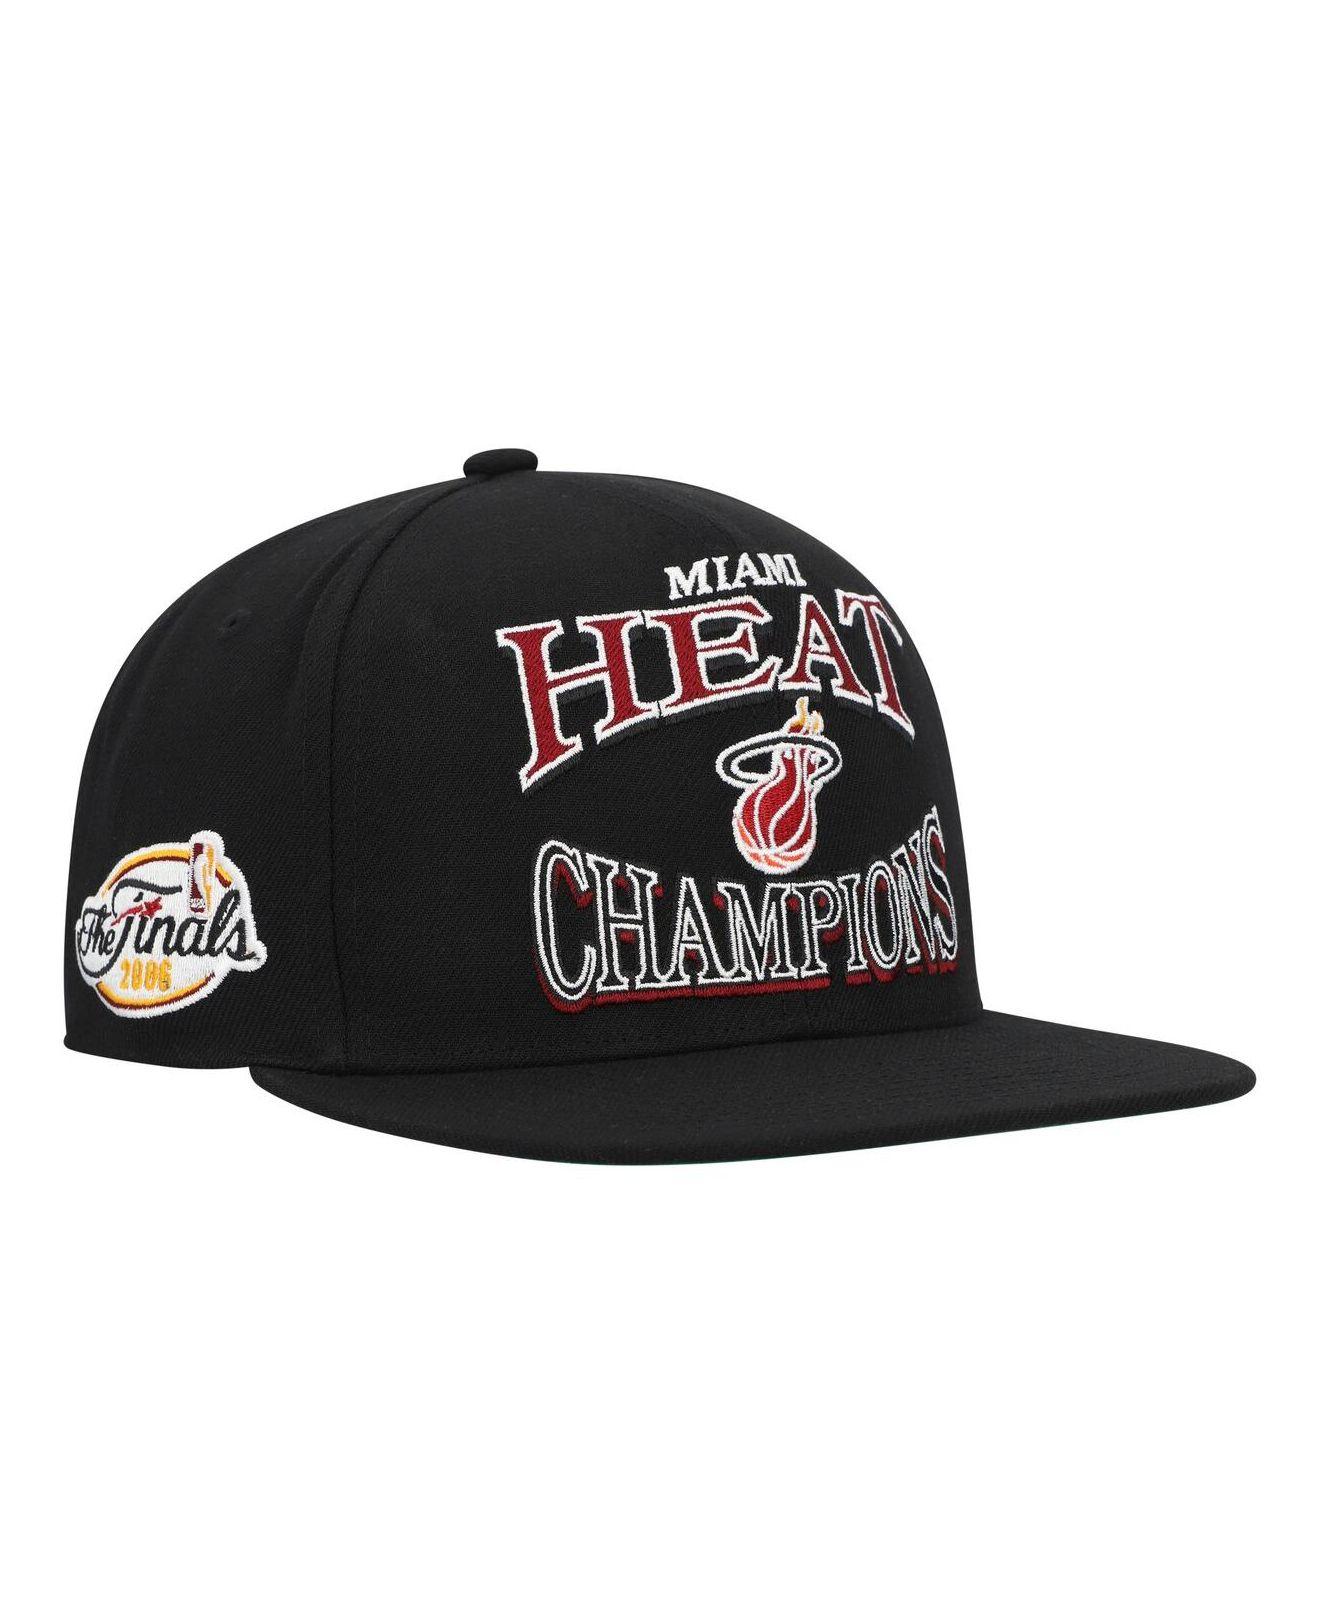 Miami Heat NBA Adidas Black Strips One Size Fits All Hat/Cap